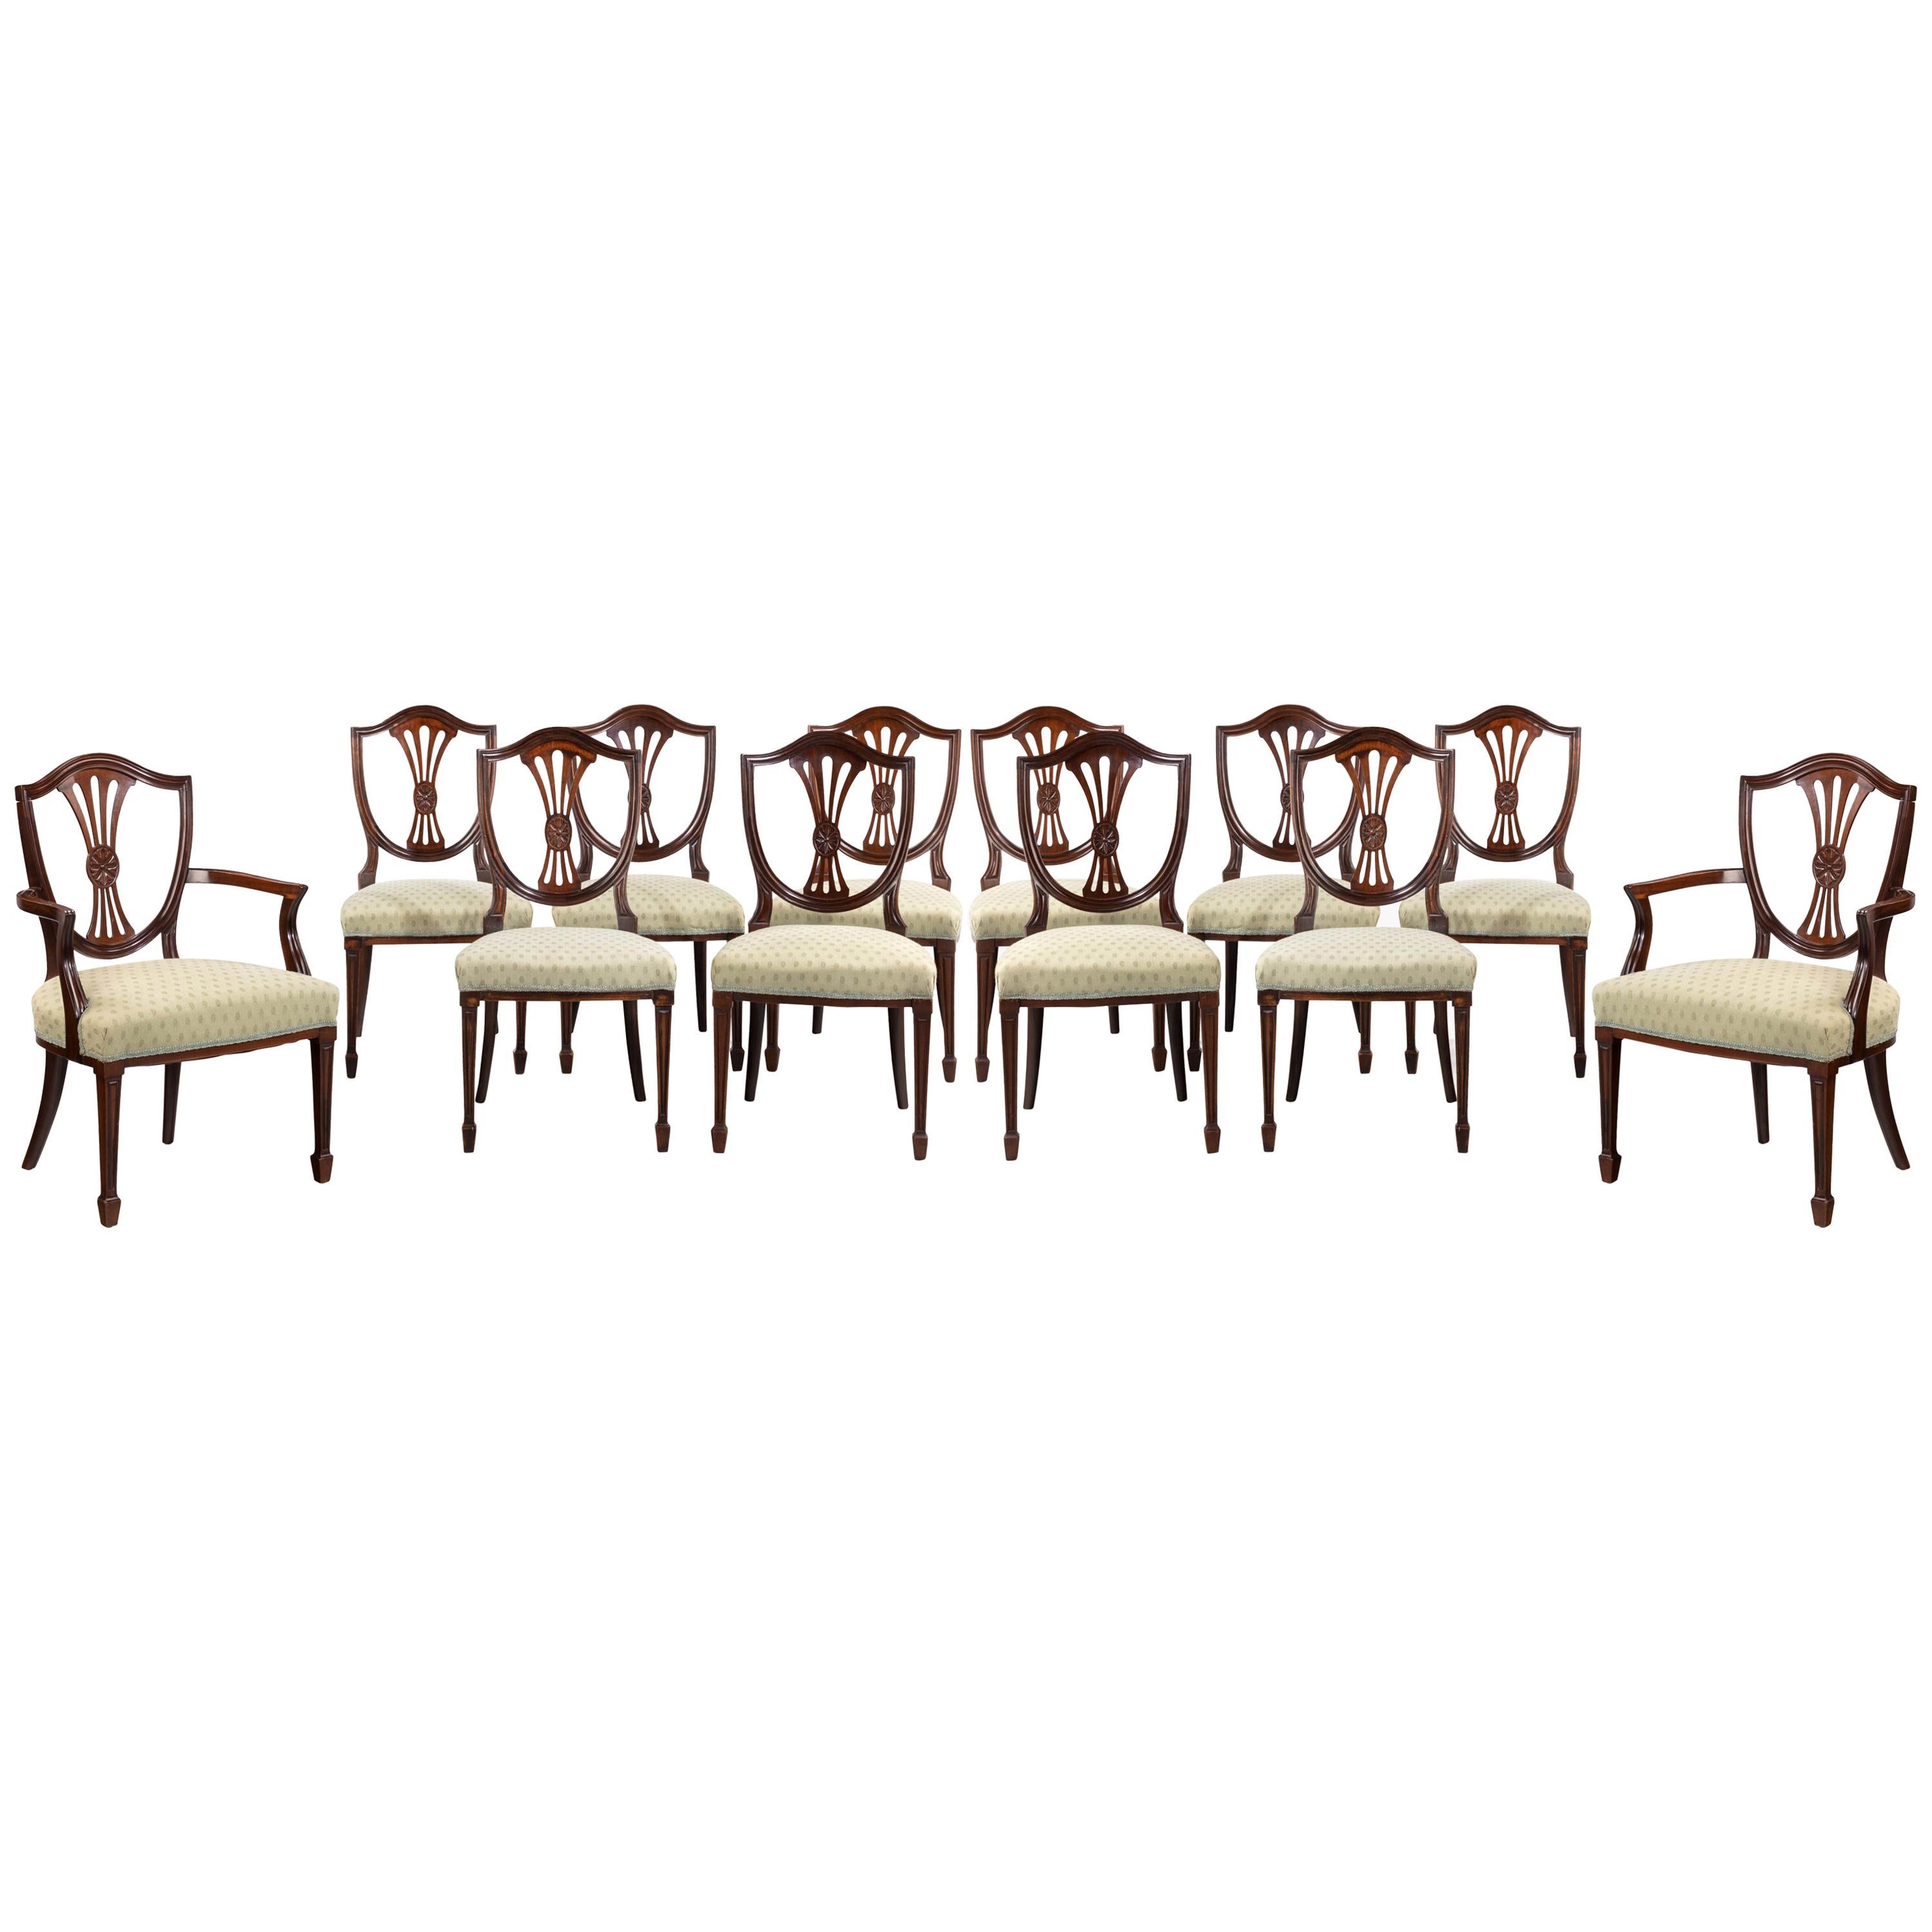 Set of 12 Hepplewhite Style Mahogany Dining Chairs